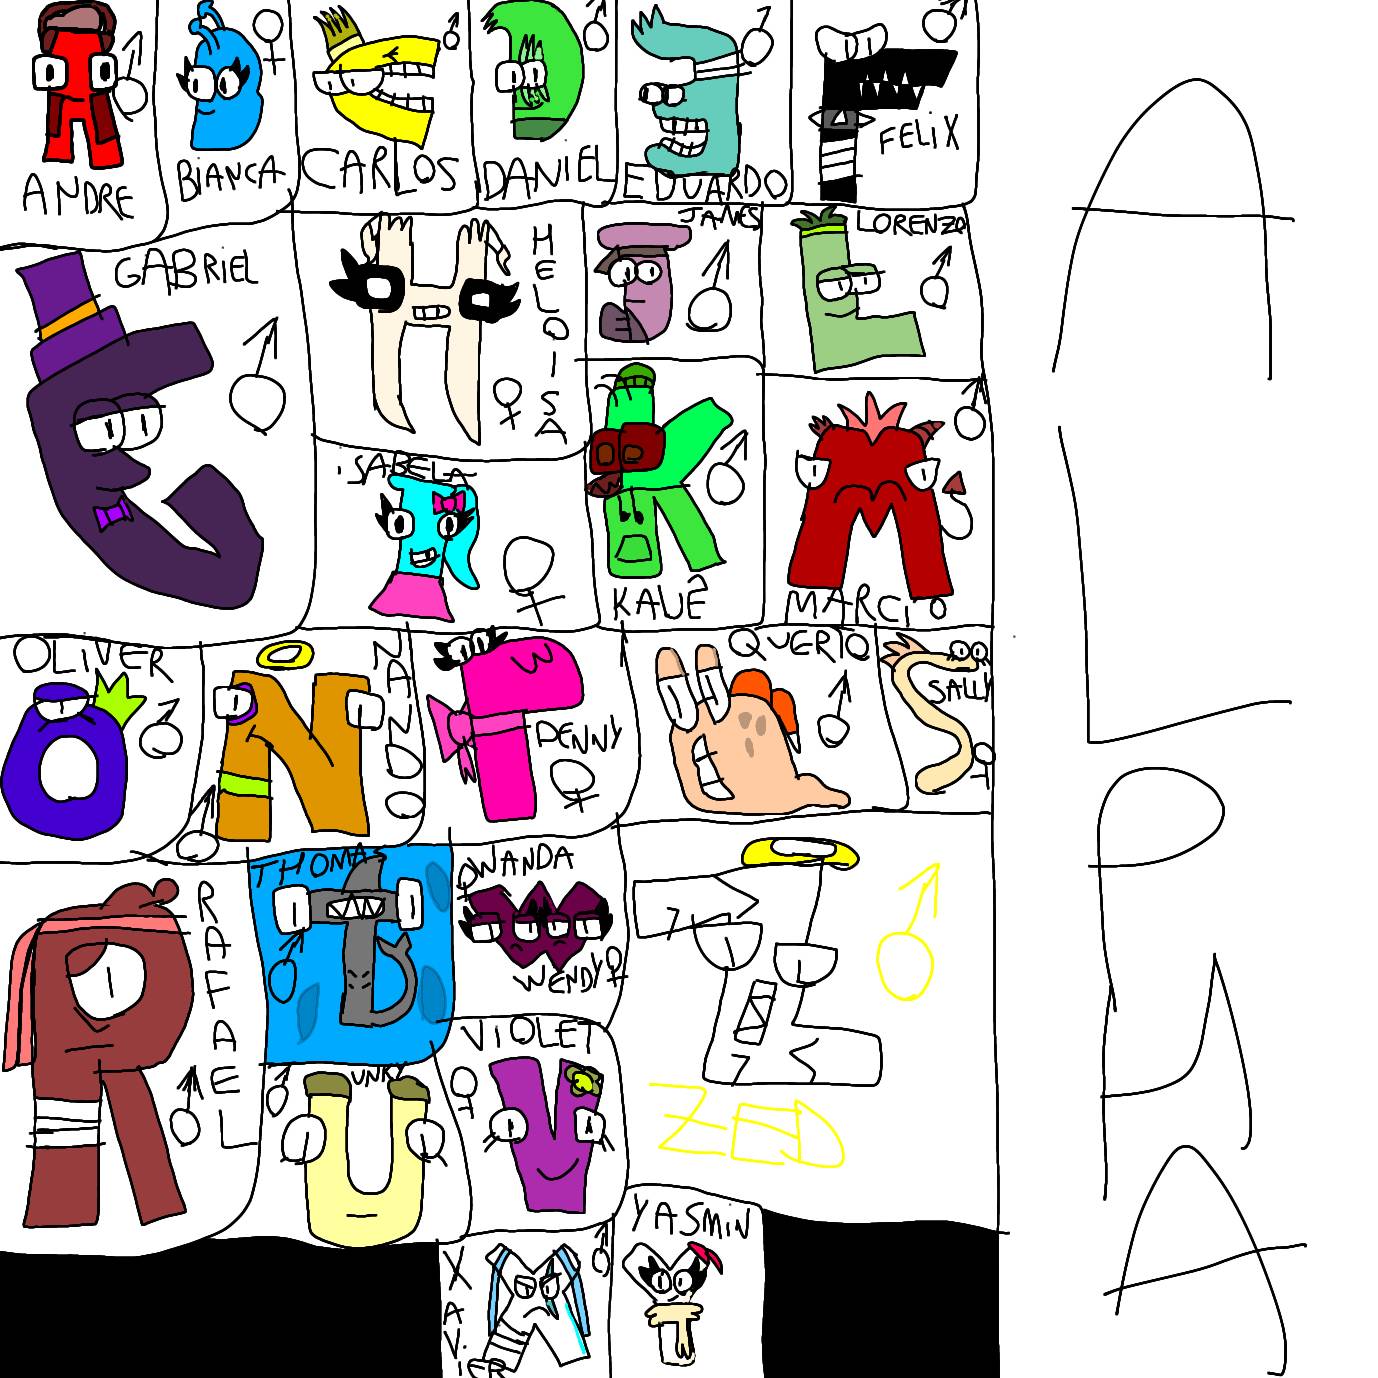 My alphabet Lore cartoon cast meme by bluepoke43 on DeviantArt